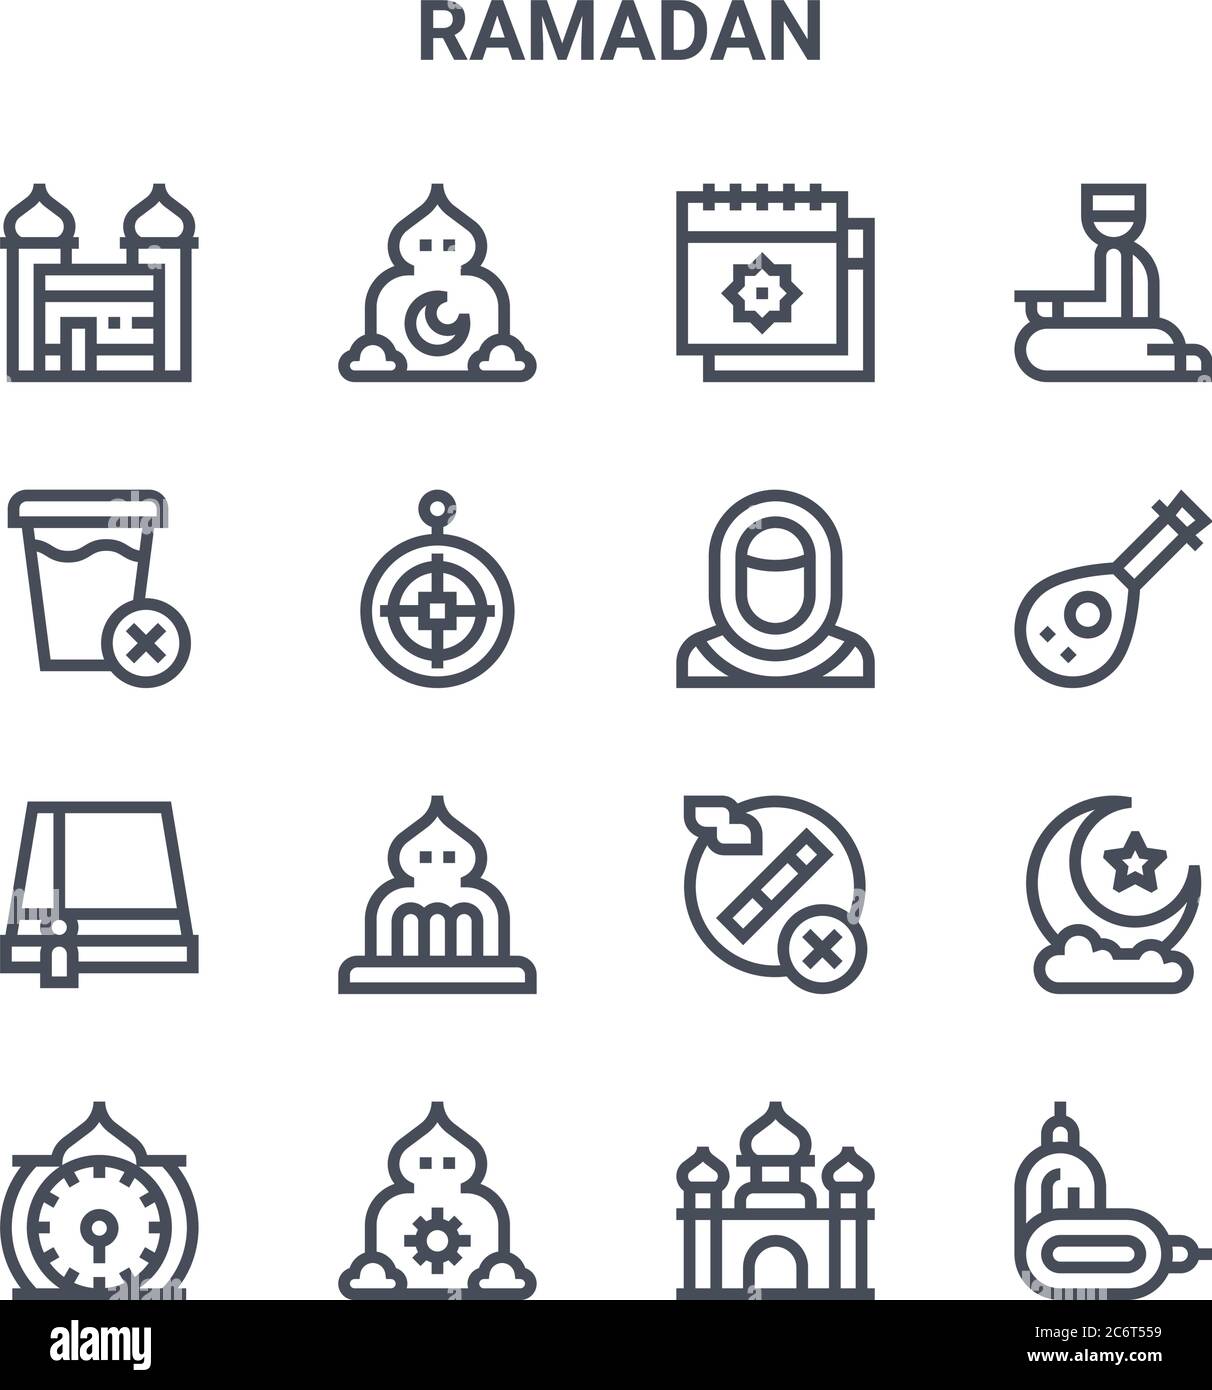 set of 16 ramadan concept vector line icons. 64x64 thin stroke icons such as isha, fasting, lute, no smoking, dzuhur, dates, mosque, muslim, salah Stock Vector